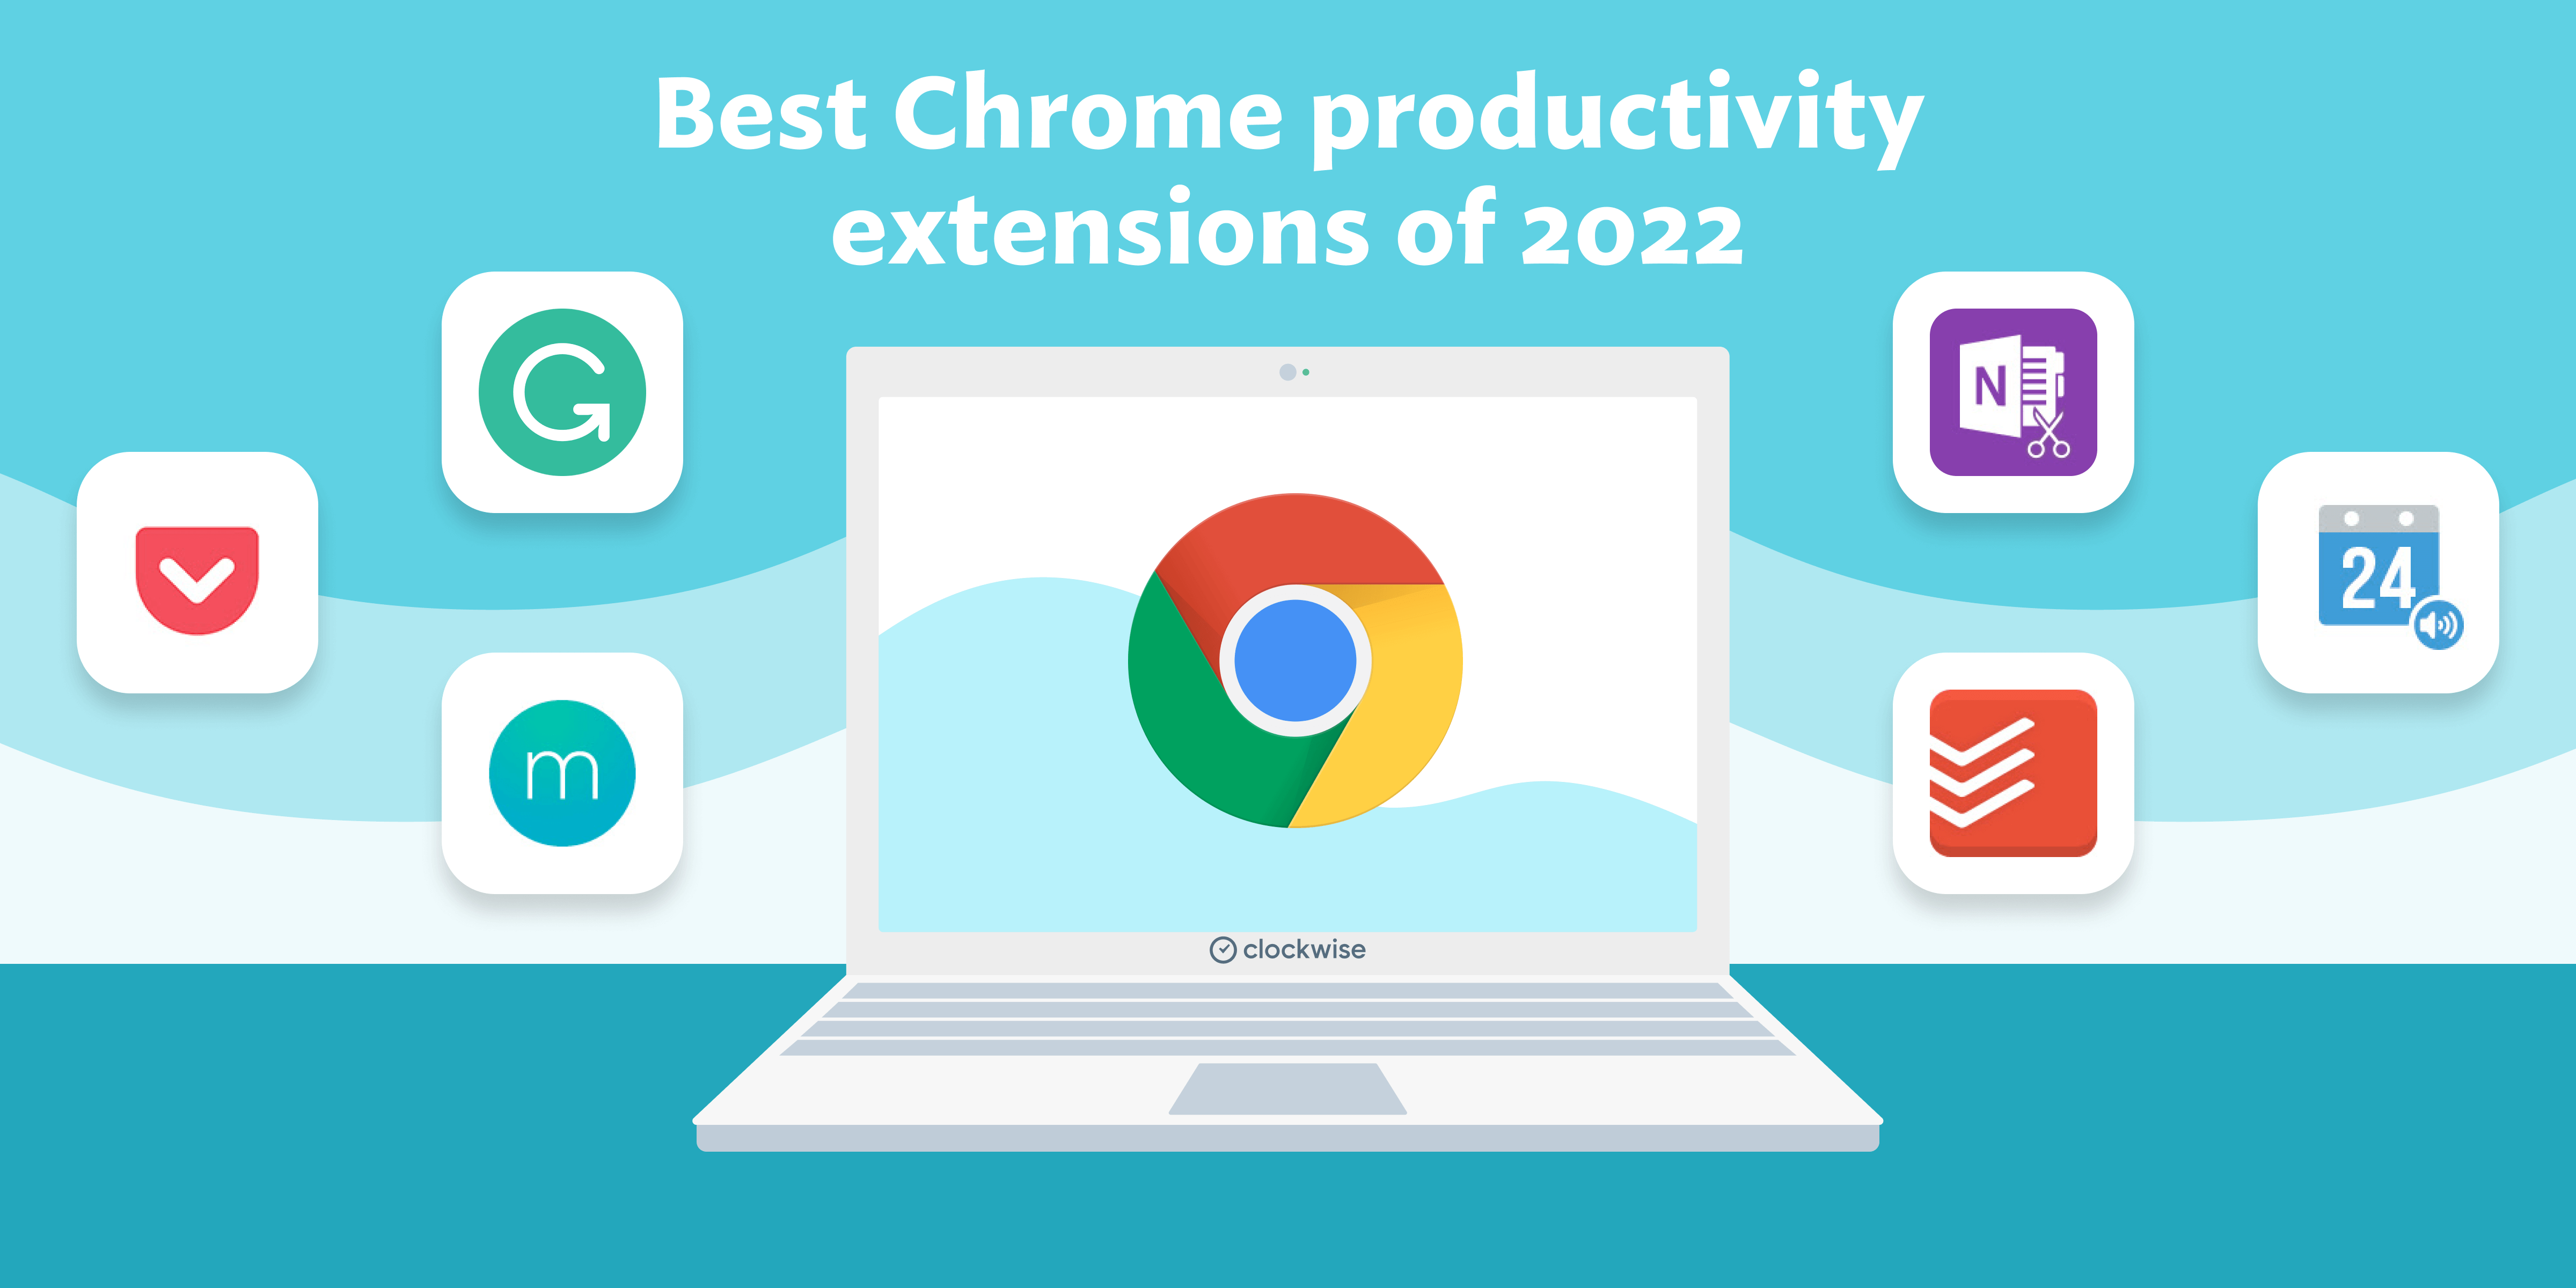 Productivity Tools: Microsoft OneNote, Trello, Evernote, Google Docs
Web Browsers: Google Chrome, Mozilla Firefox, Microsoft Edge, Safari